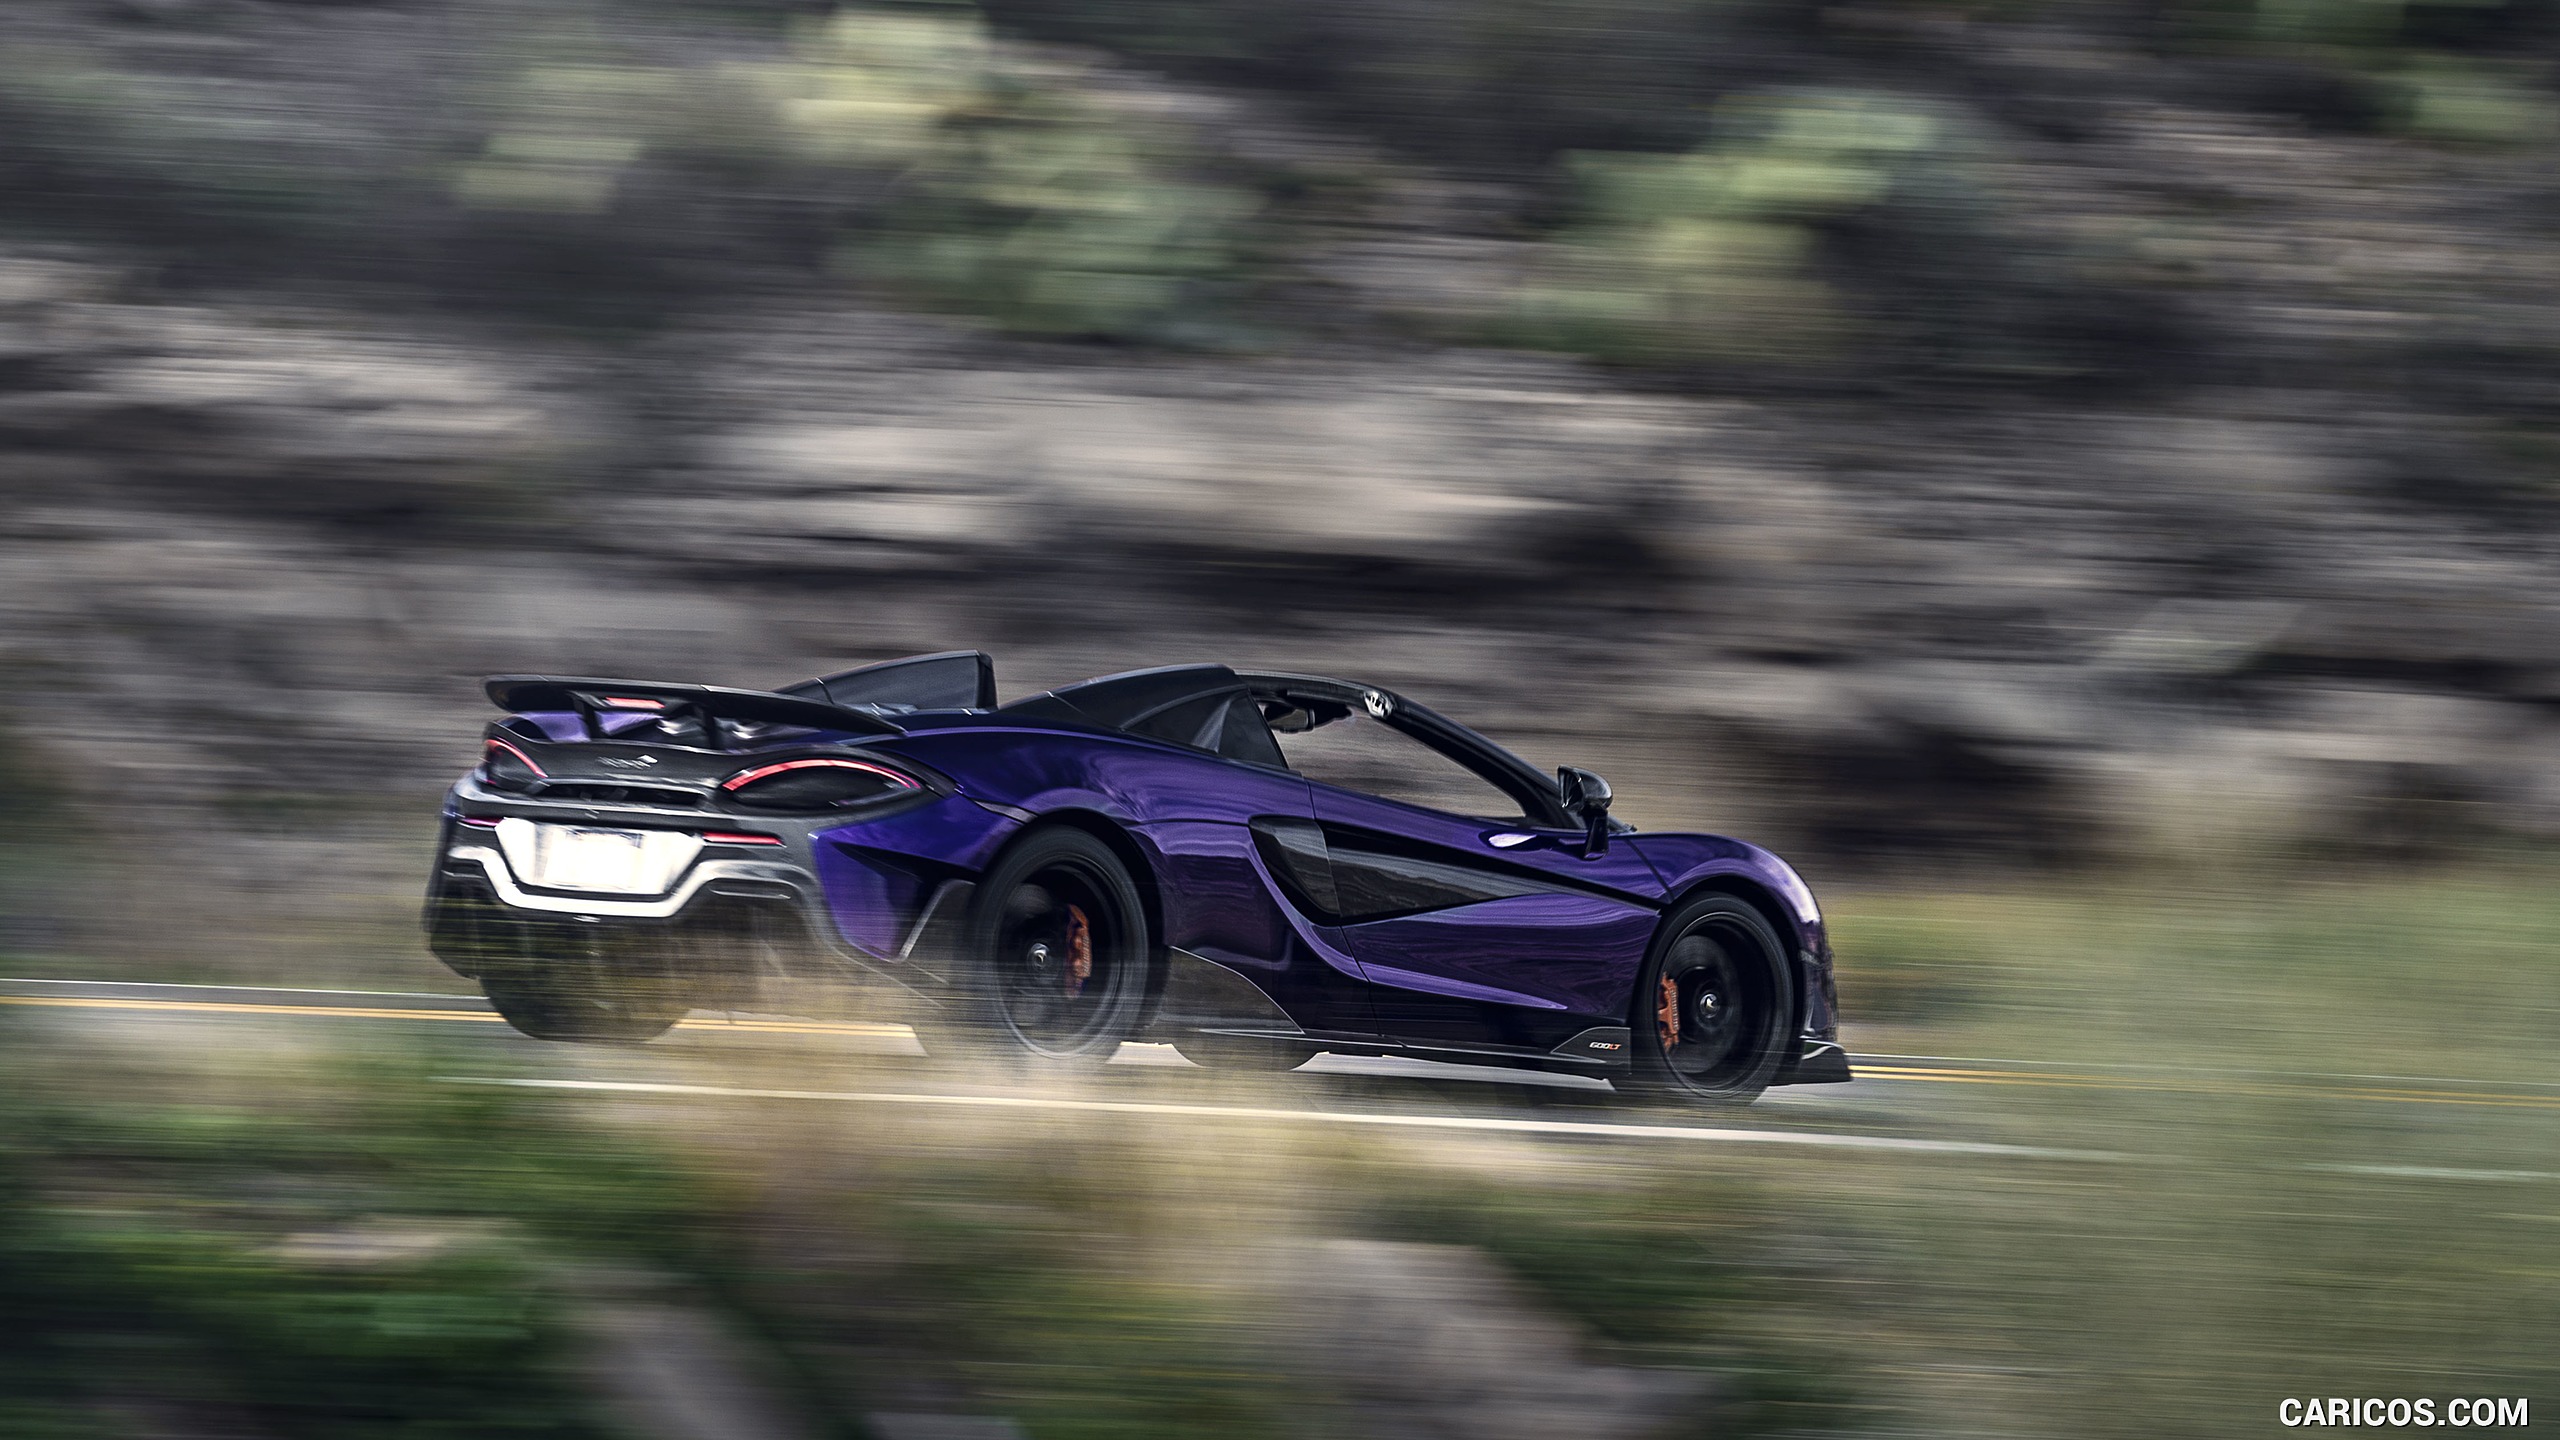 2020 McLaren 600LT Spider (Color: Lantana Purple) - Rear Three-Quarter, #48 of 97